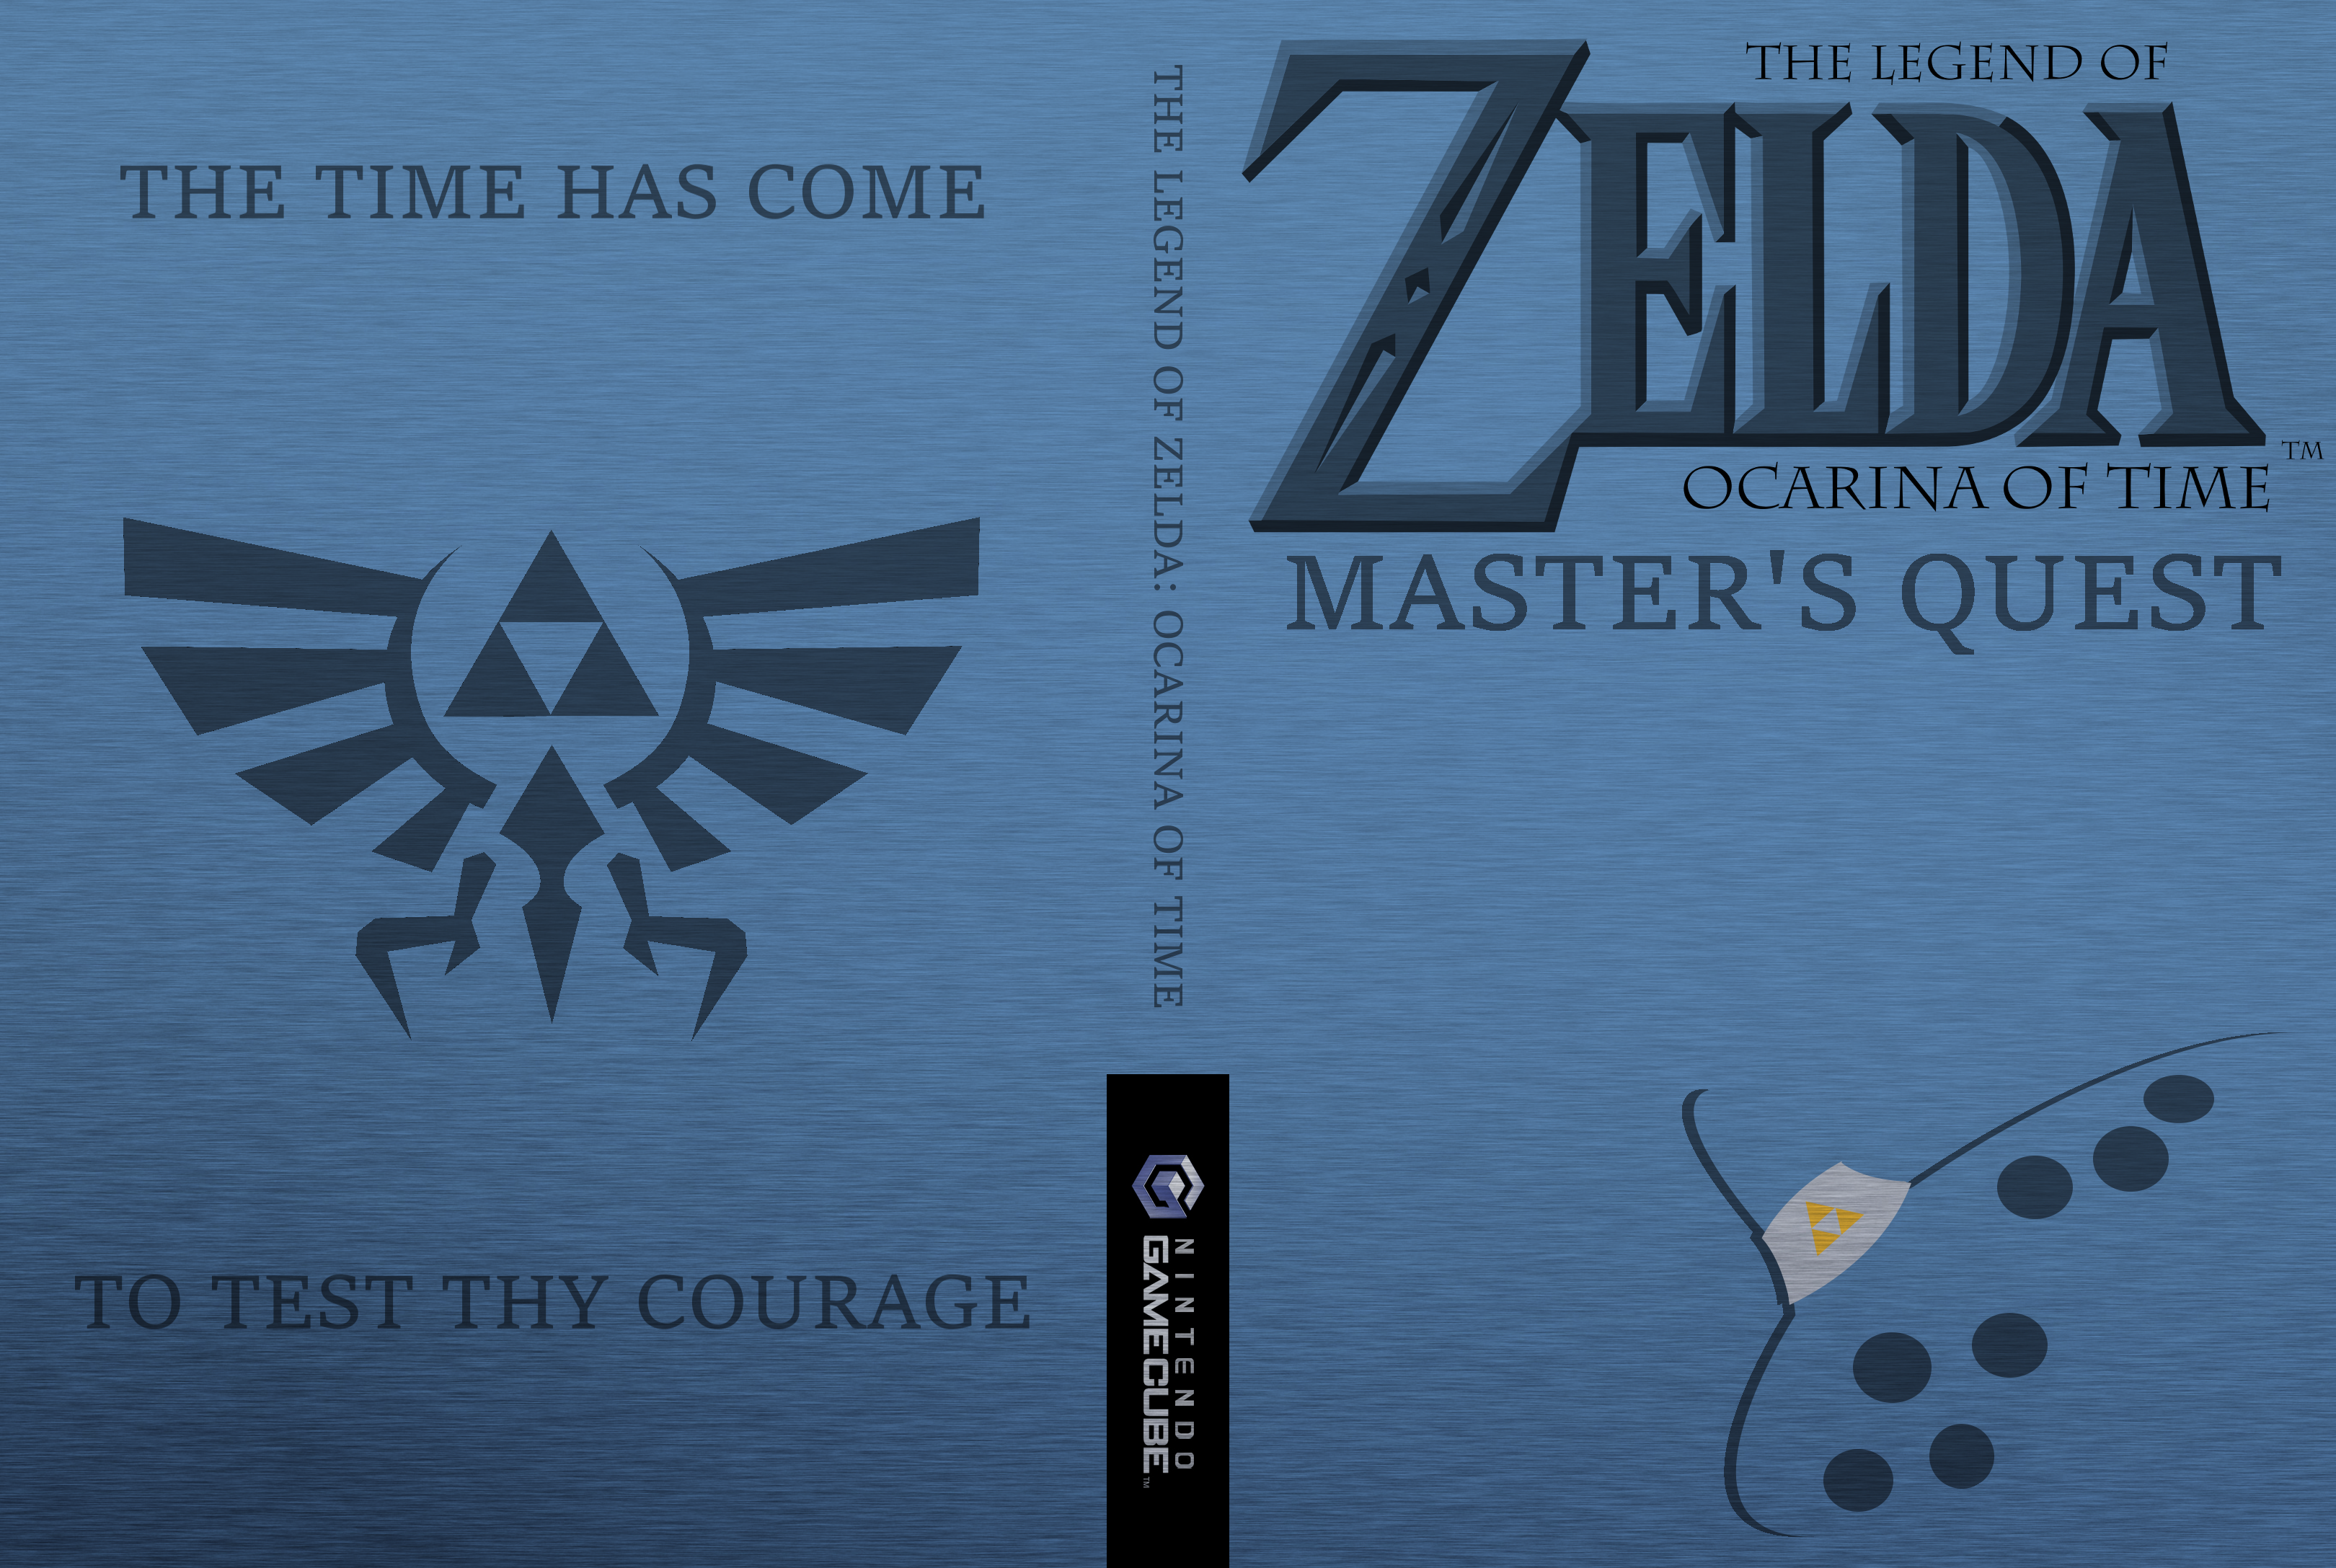 Zelda Ocarina of Time Master Quest, Item, Box, and Manual